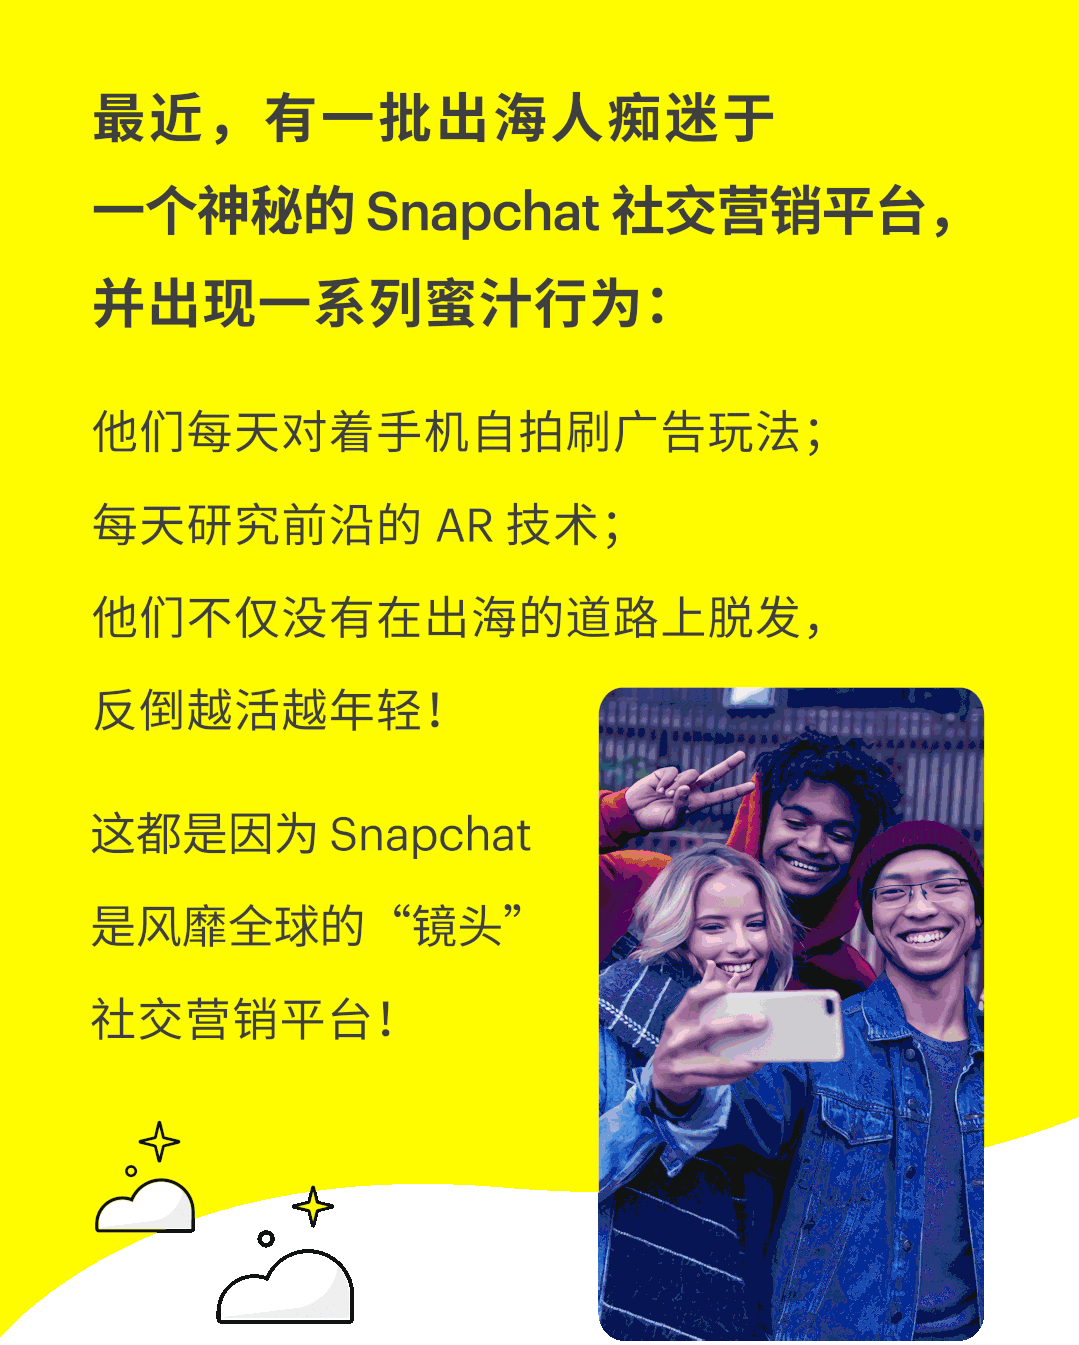 Why Snapchat?